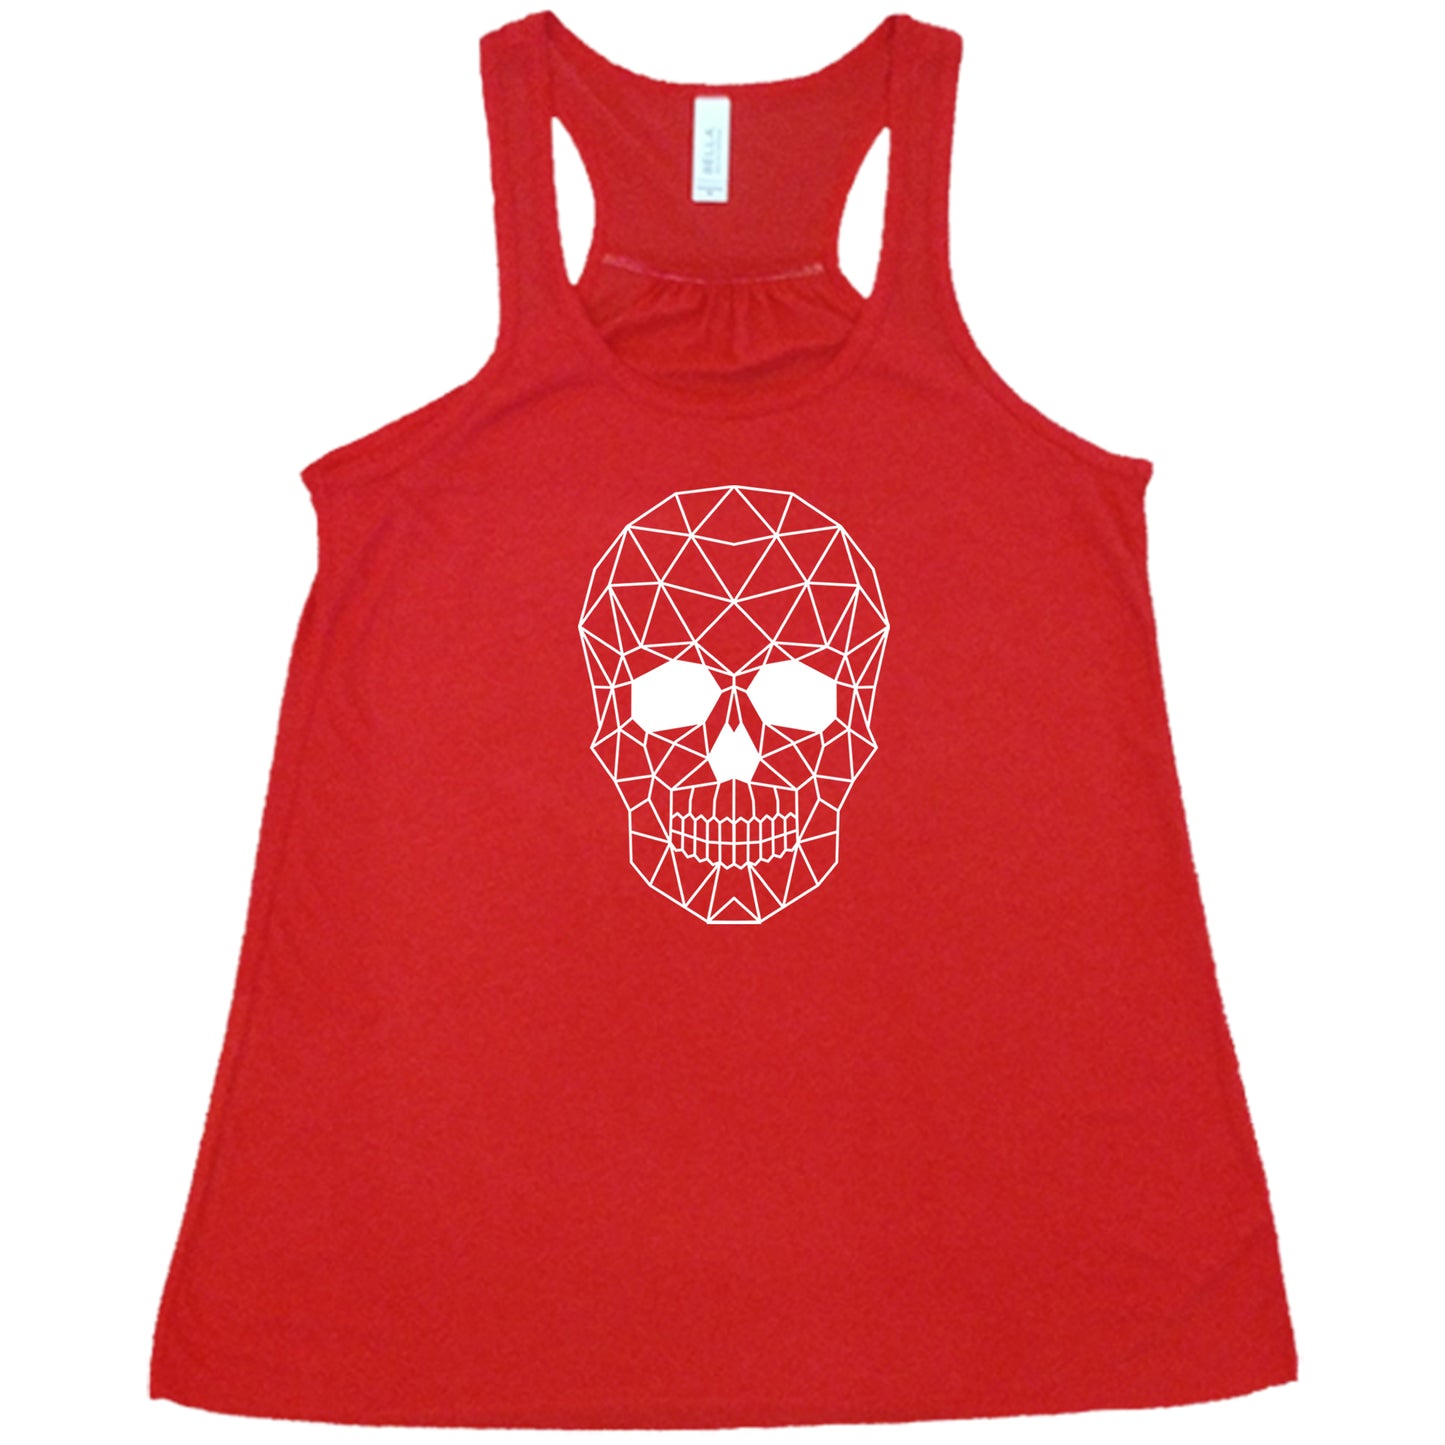 red colored geometric skull shirt